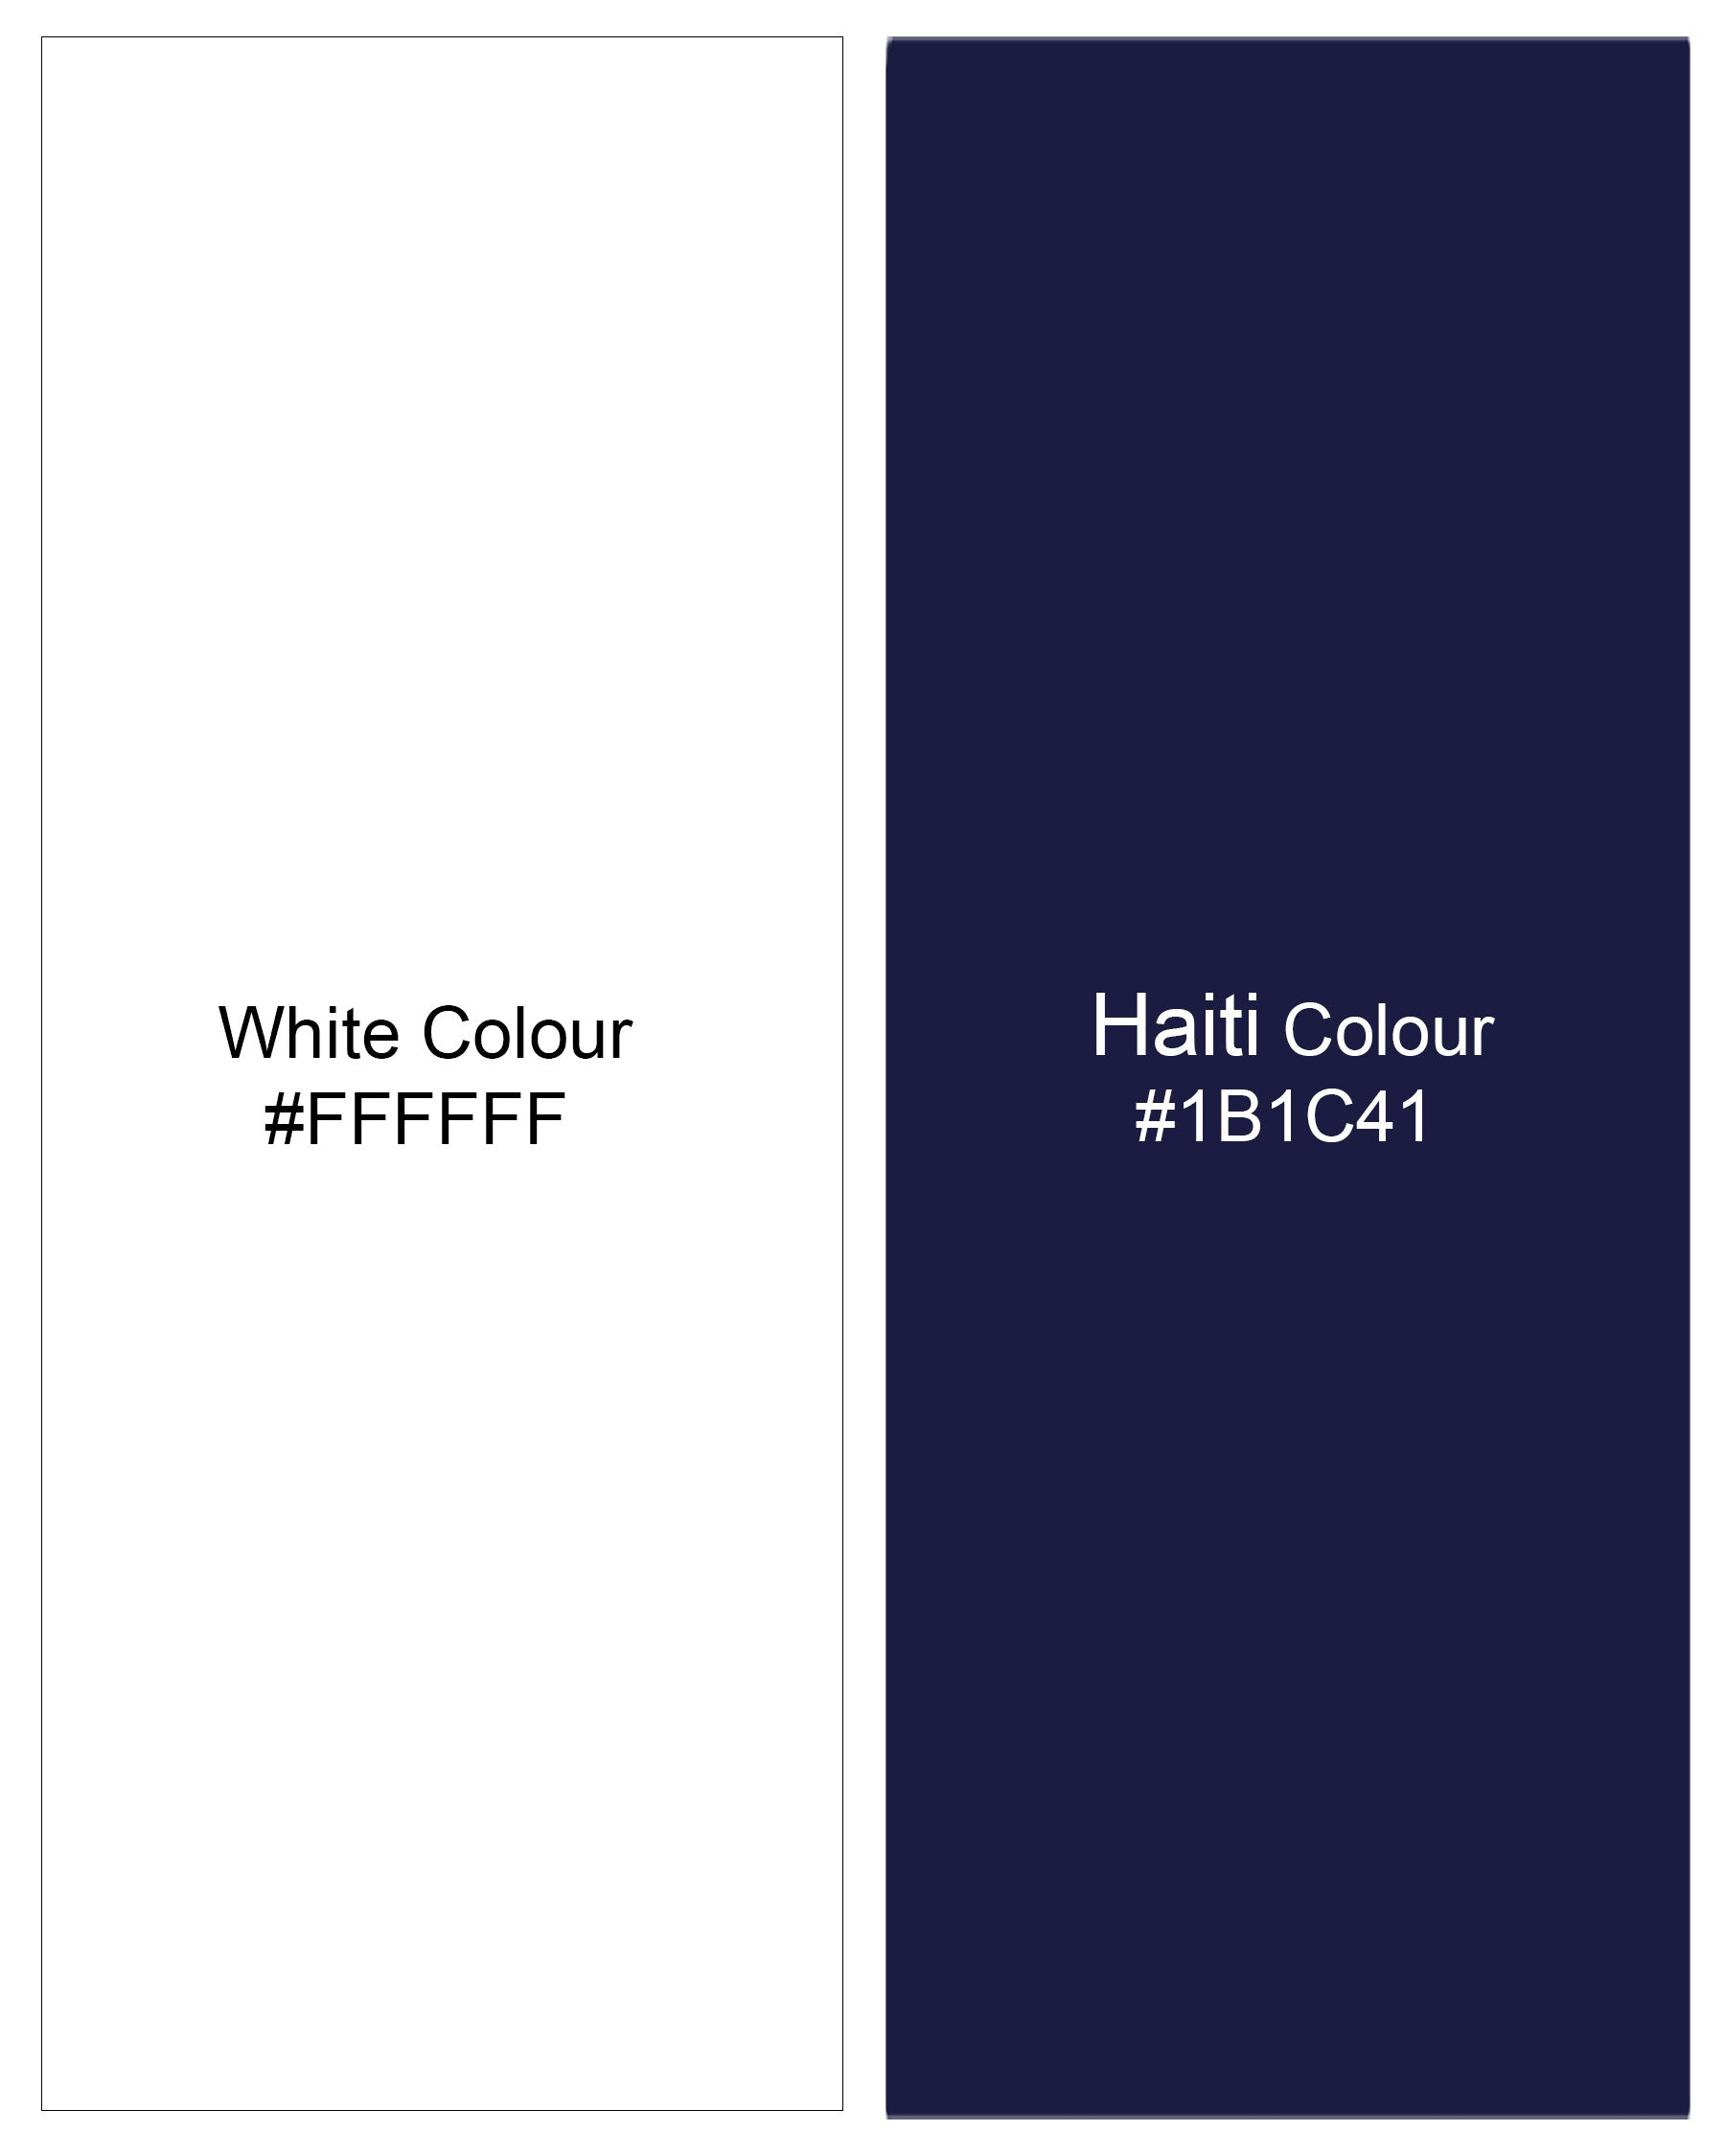 Bright White with Haiti Navy Blue Stitched Design Super Soft Premium Cotton Shirt 8349-M-38, 8349-M-H-38, 8349-M-39, 8349-M-H-39, 8349-M-40, 8349-M-H-40, 8349-M-42, 8349-M-H-42, 8349-M-44, 8349-M-H-44, 8349-M-46, 8349-M-H-46, 8349-M-48, 8349-M-H-48, 8349-M-50, 8349-M-H-50, 8349-M-52, 8349-M-H-52